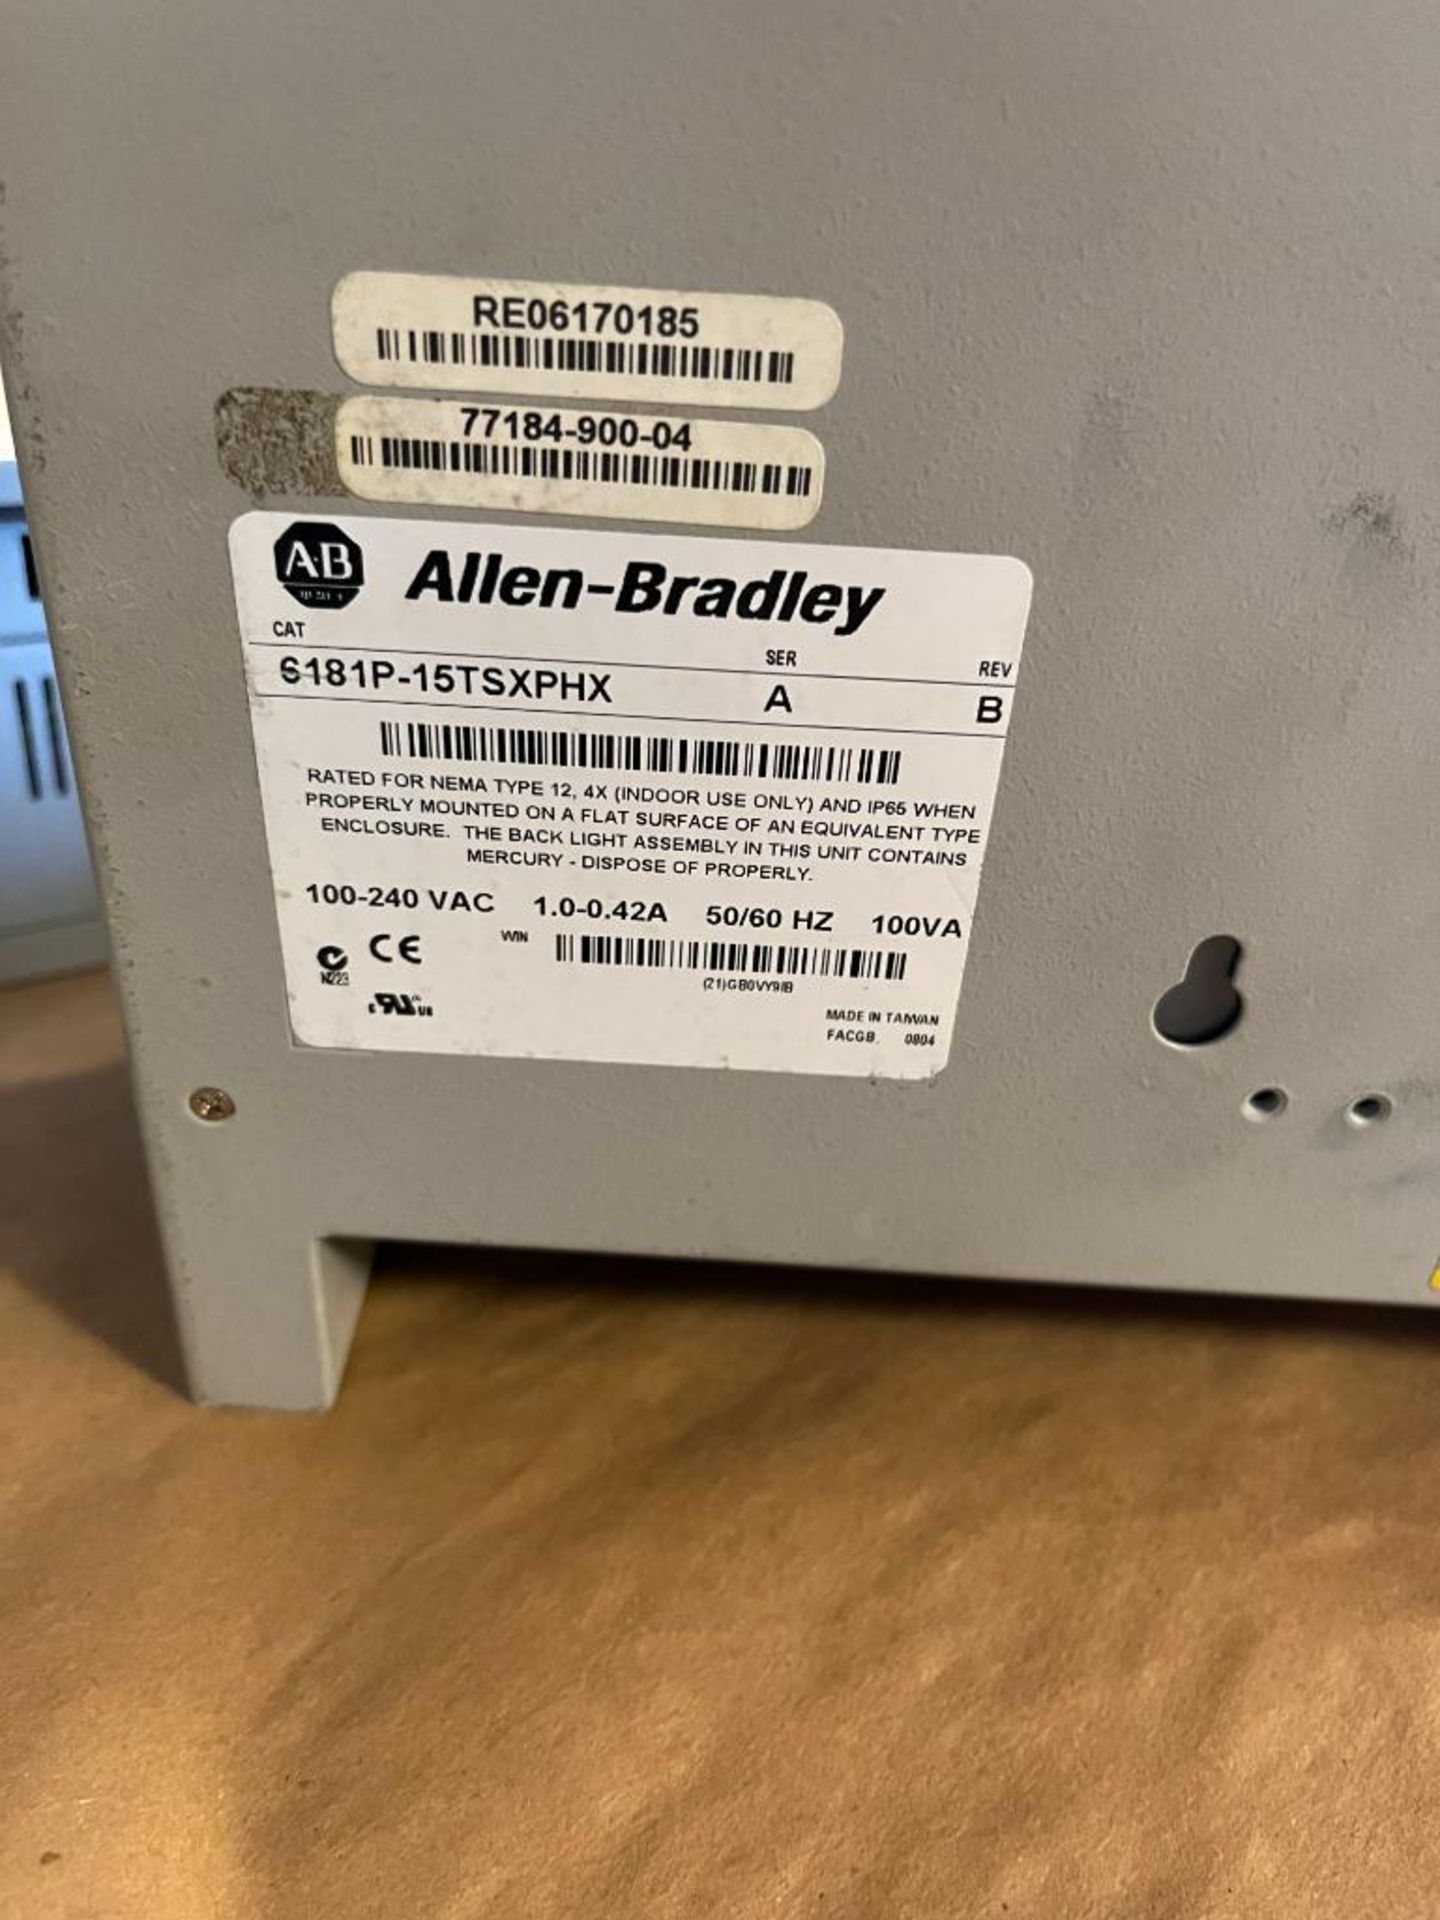 Allen-Bradley VersaView 1500P, Catalog Number 6181P-15TSXPHX, Series A, 240 VAC - Image 3 of 3